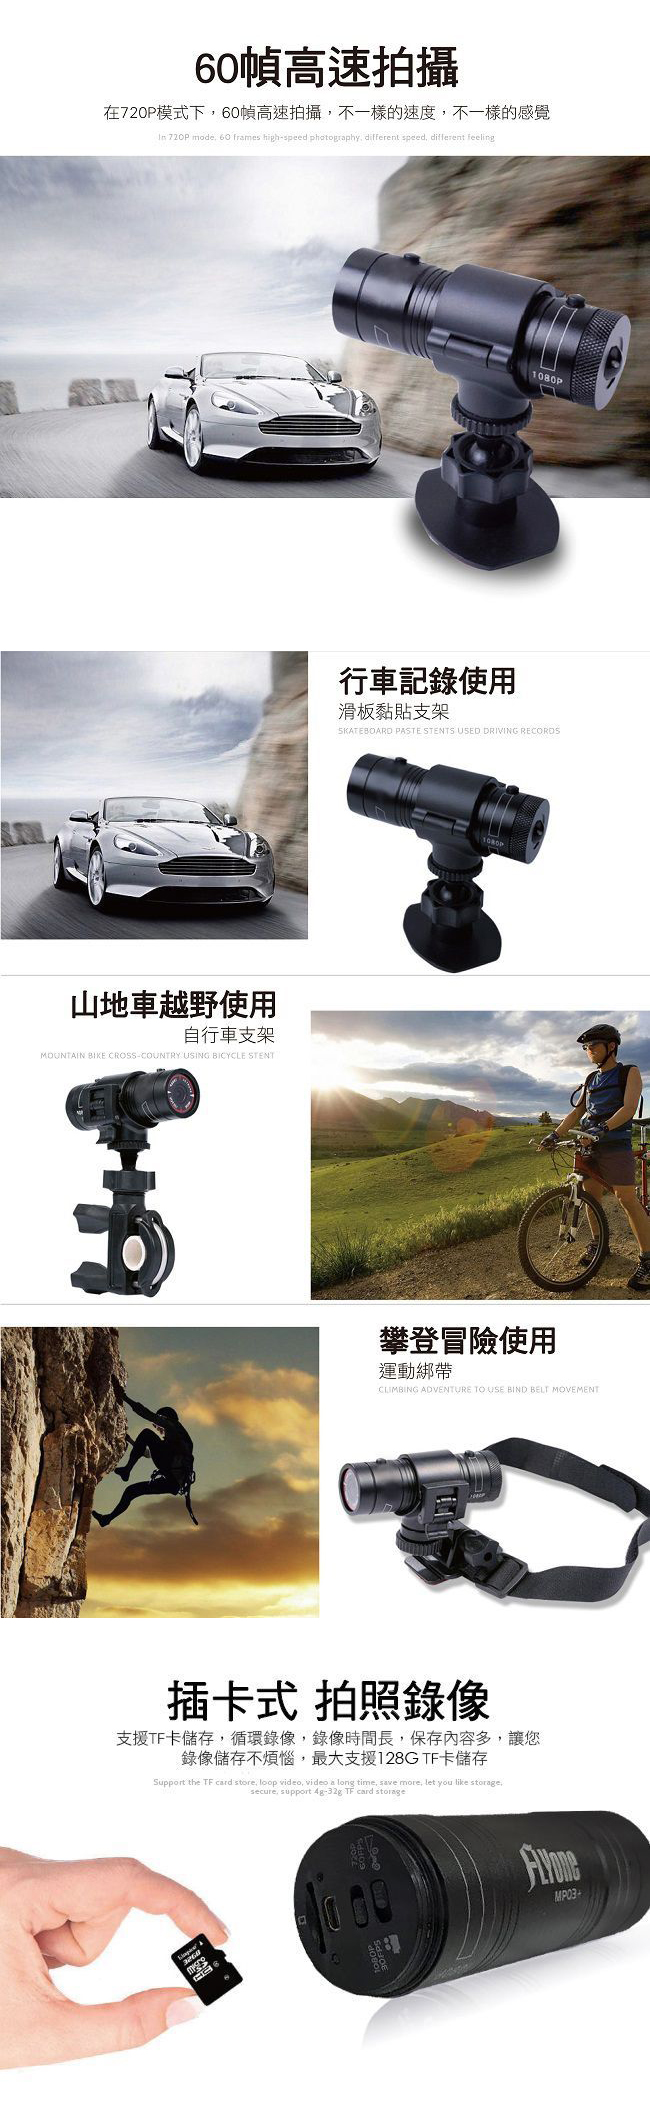 FLYone MP03+ SONY感光/1080P 高畫質機車行車記錄器/運動相機-自